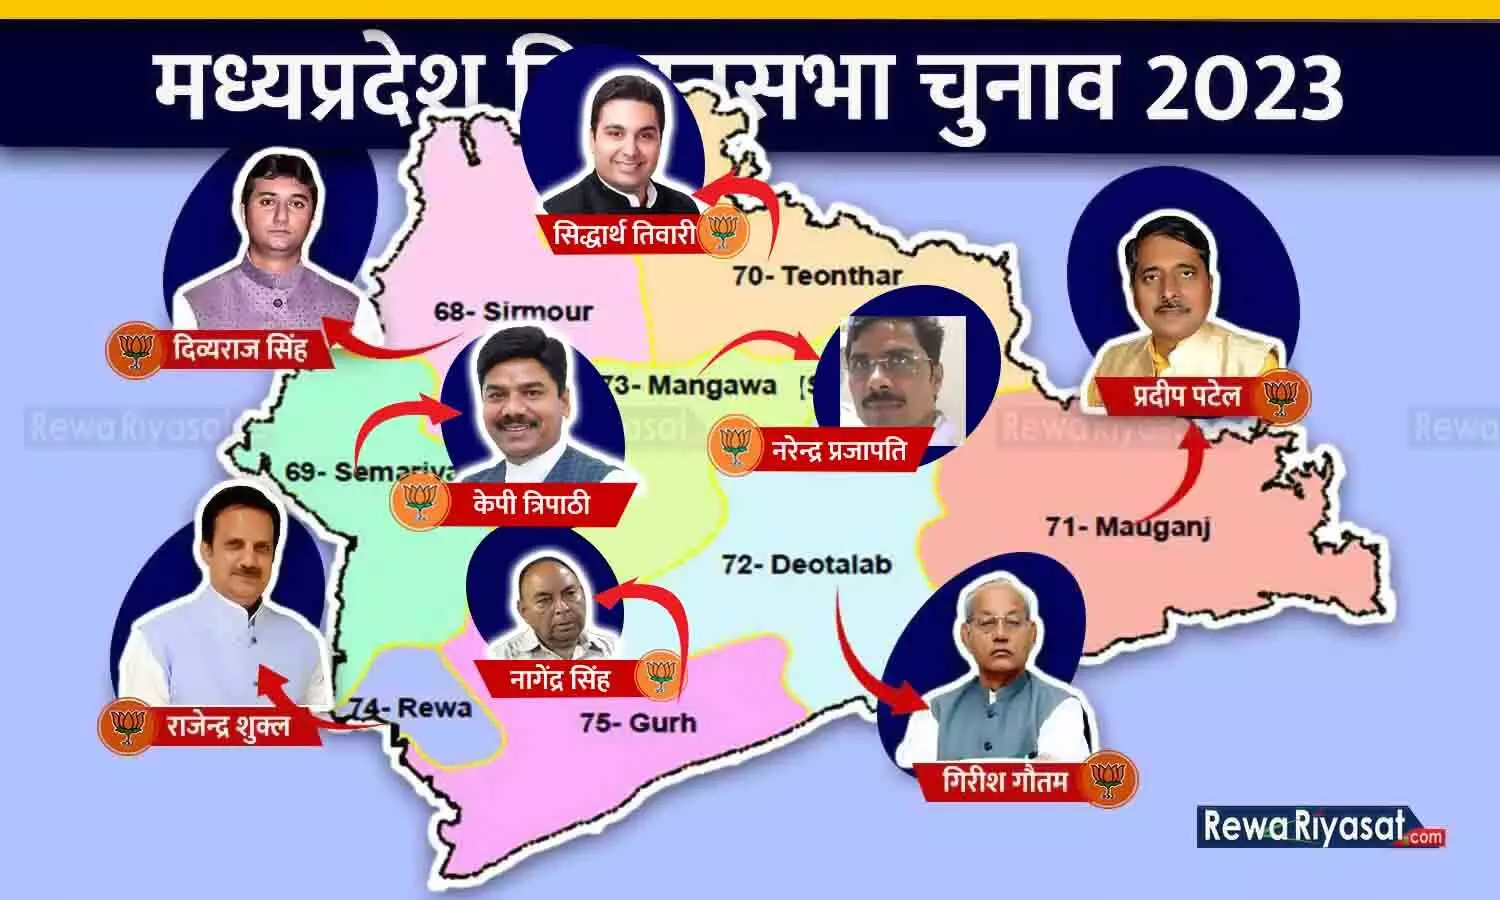 Rewa BJP candidates